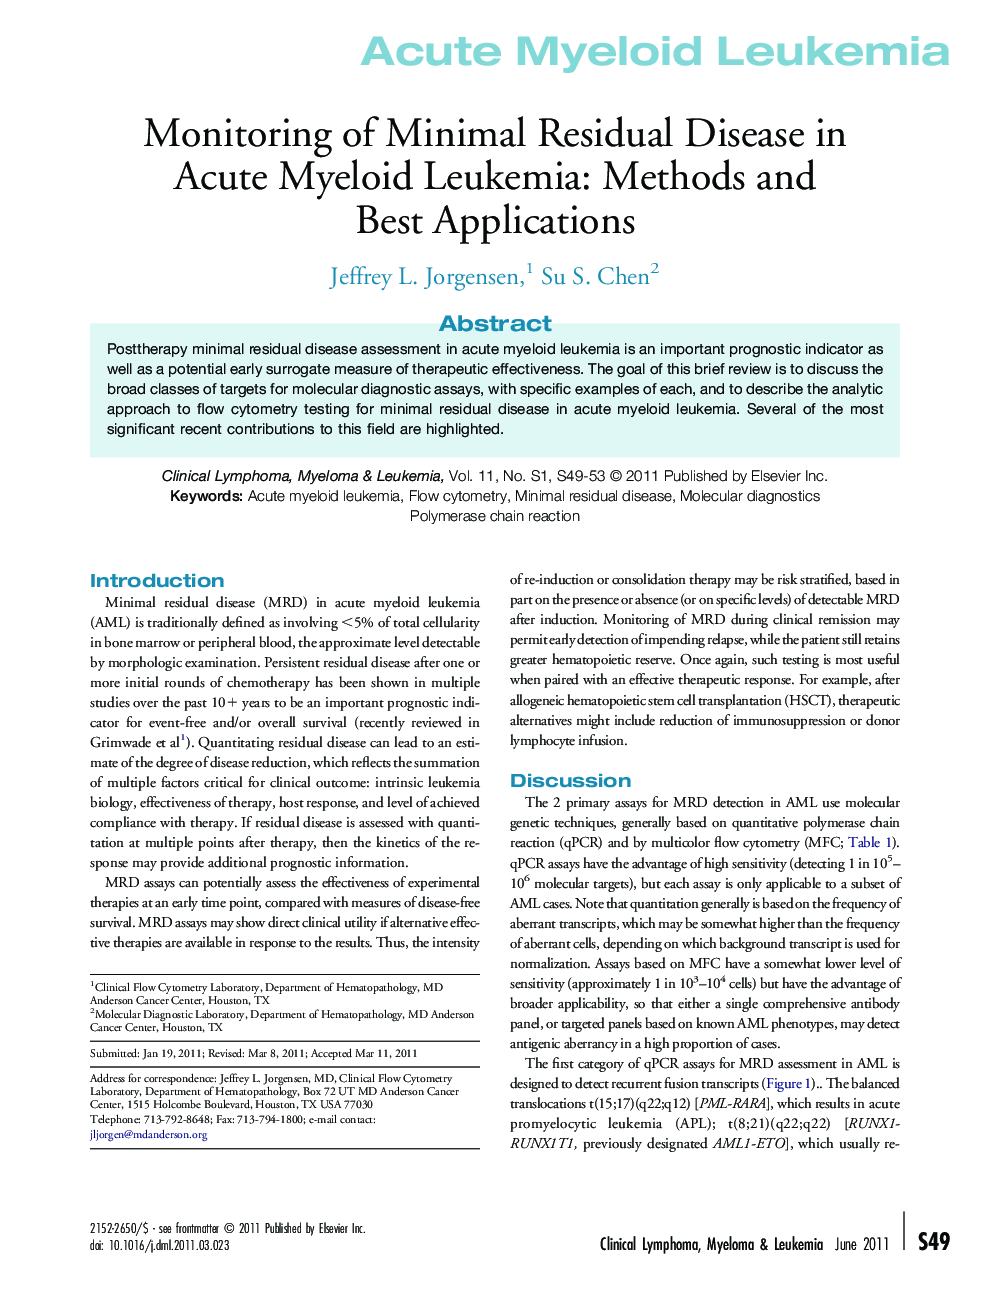 Monitoring of Minimal Residual Disease in Acute Myeloid Leukemia: Methods and Best Applications